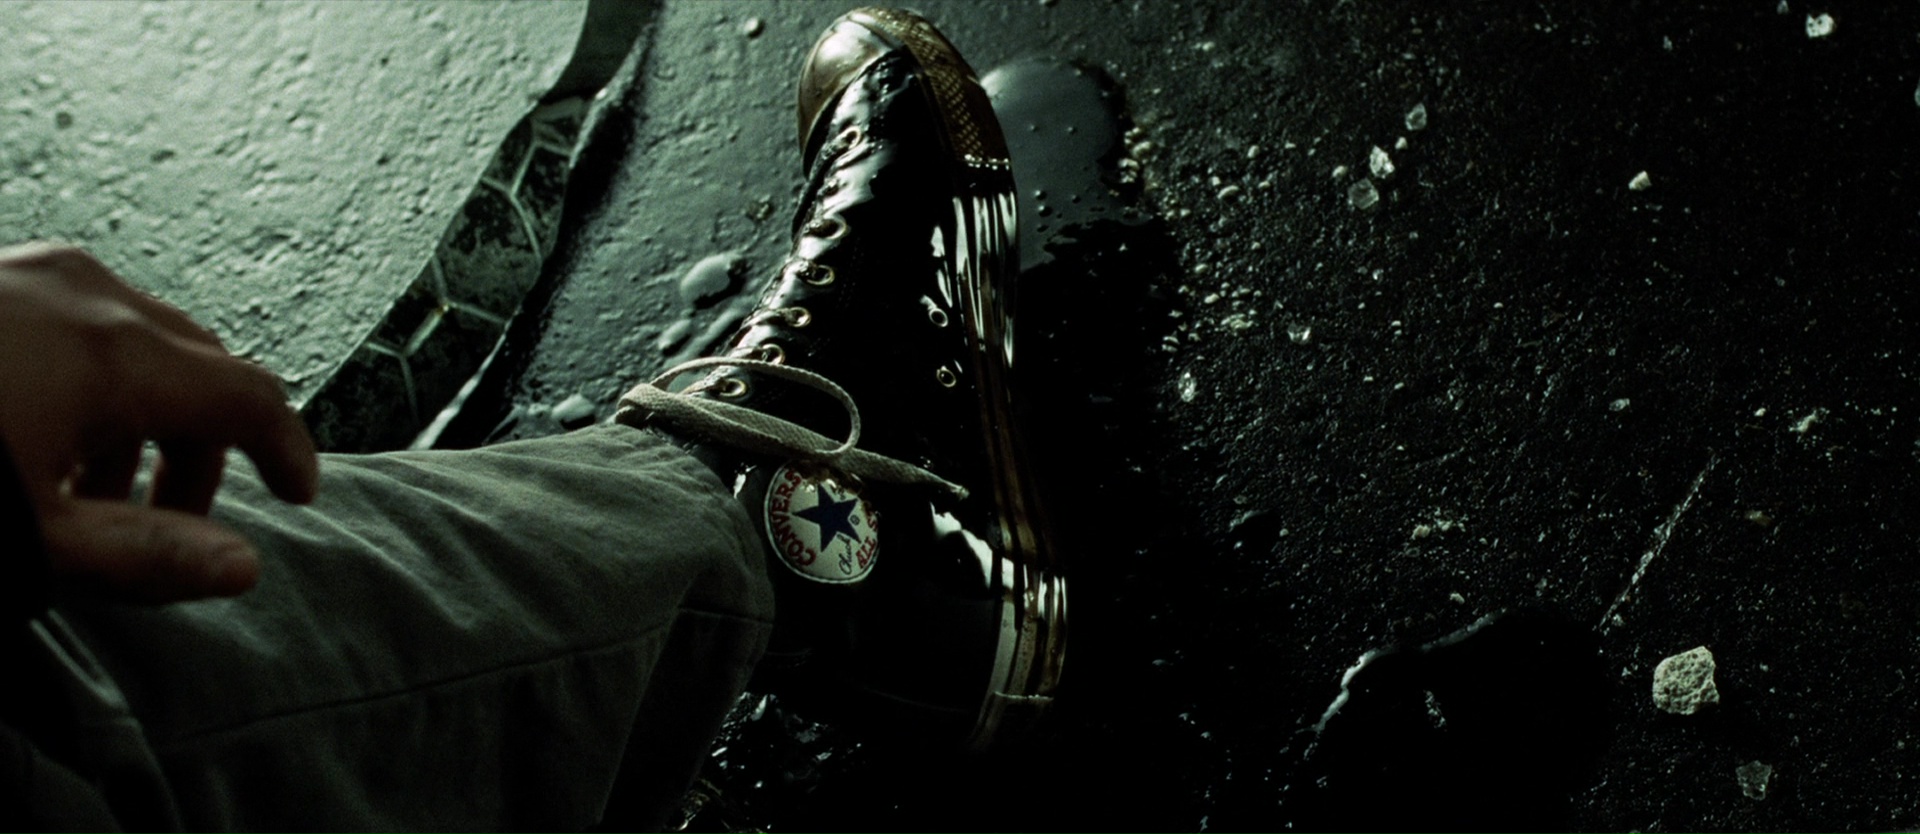 Bevestigen Op de grond volleybal Converse Sneakers Worn By Will Smith In I, Robot (2004)